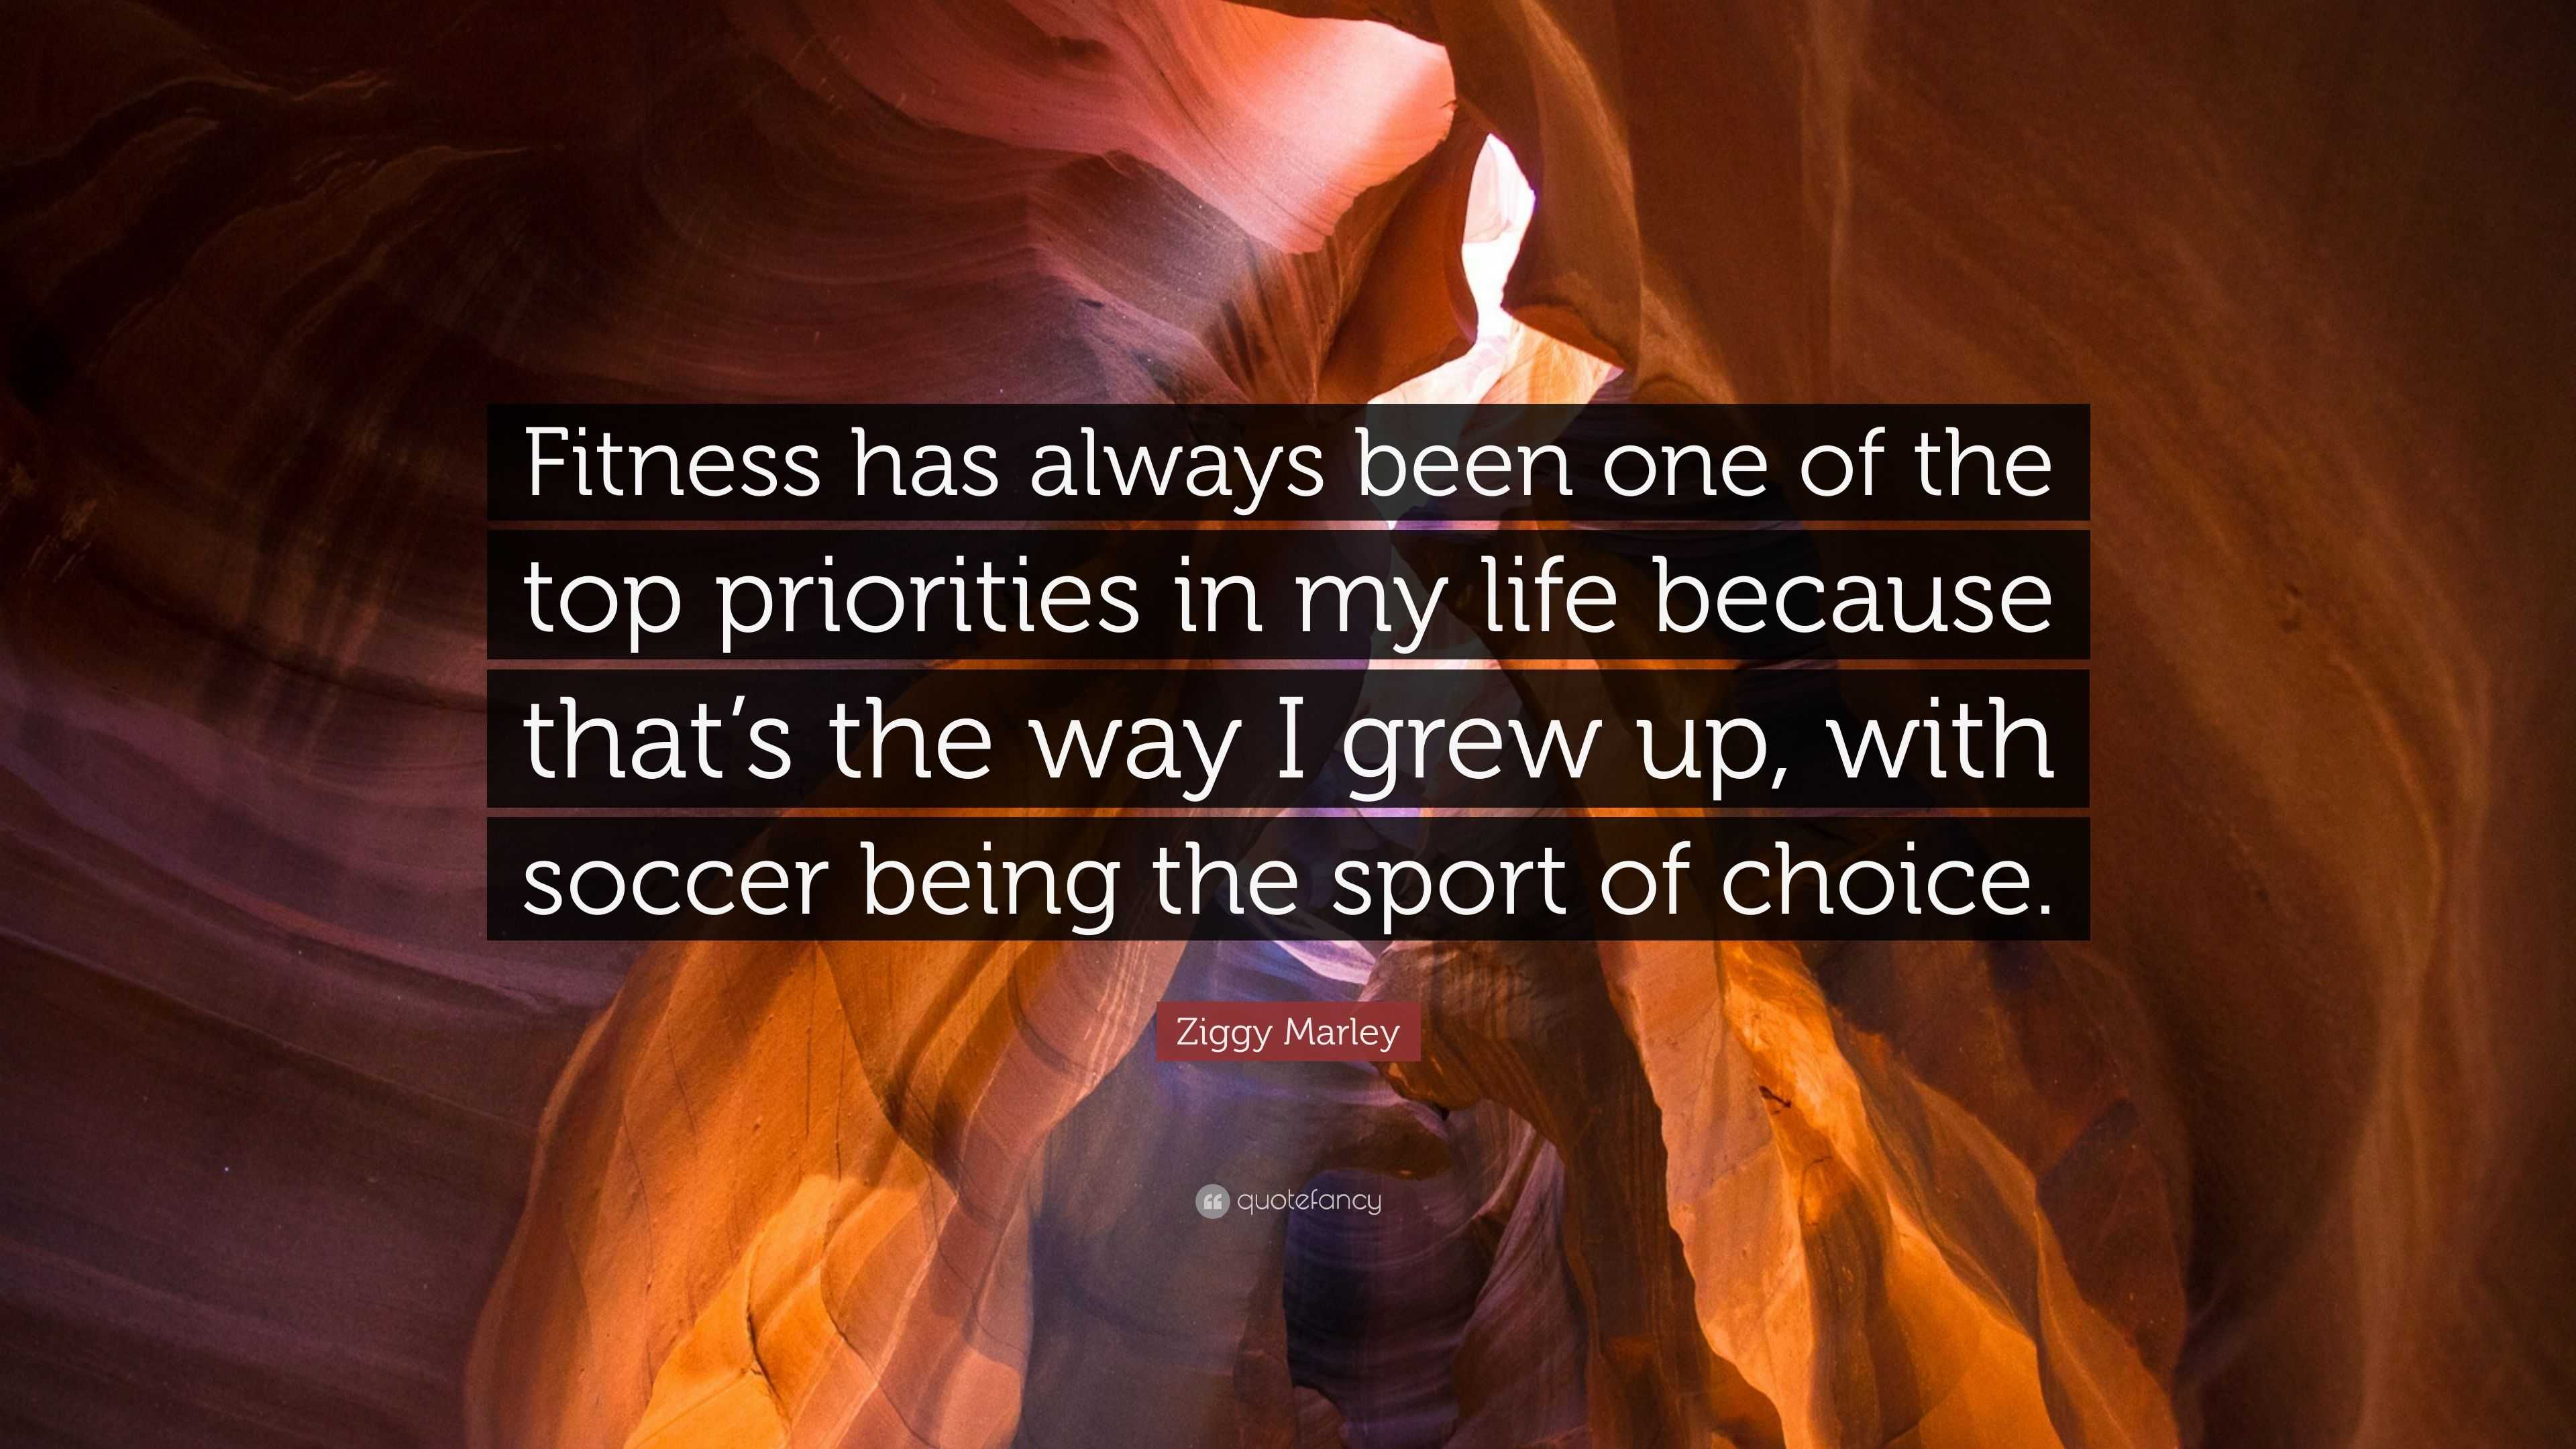 Ziggy Marley Quote: “Fitness has always been one of the top